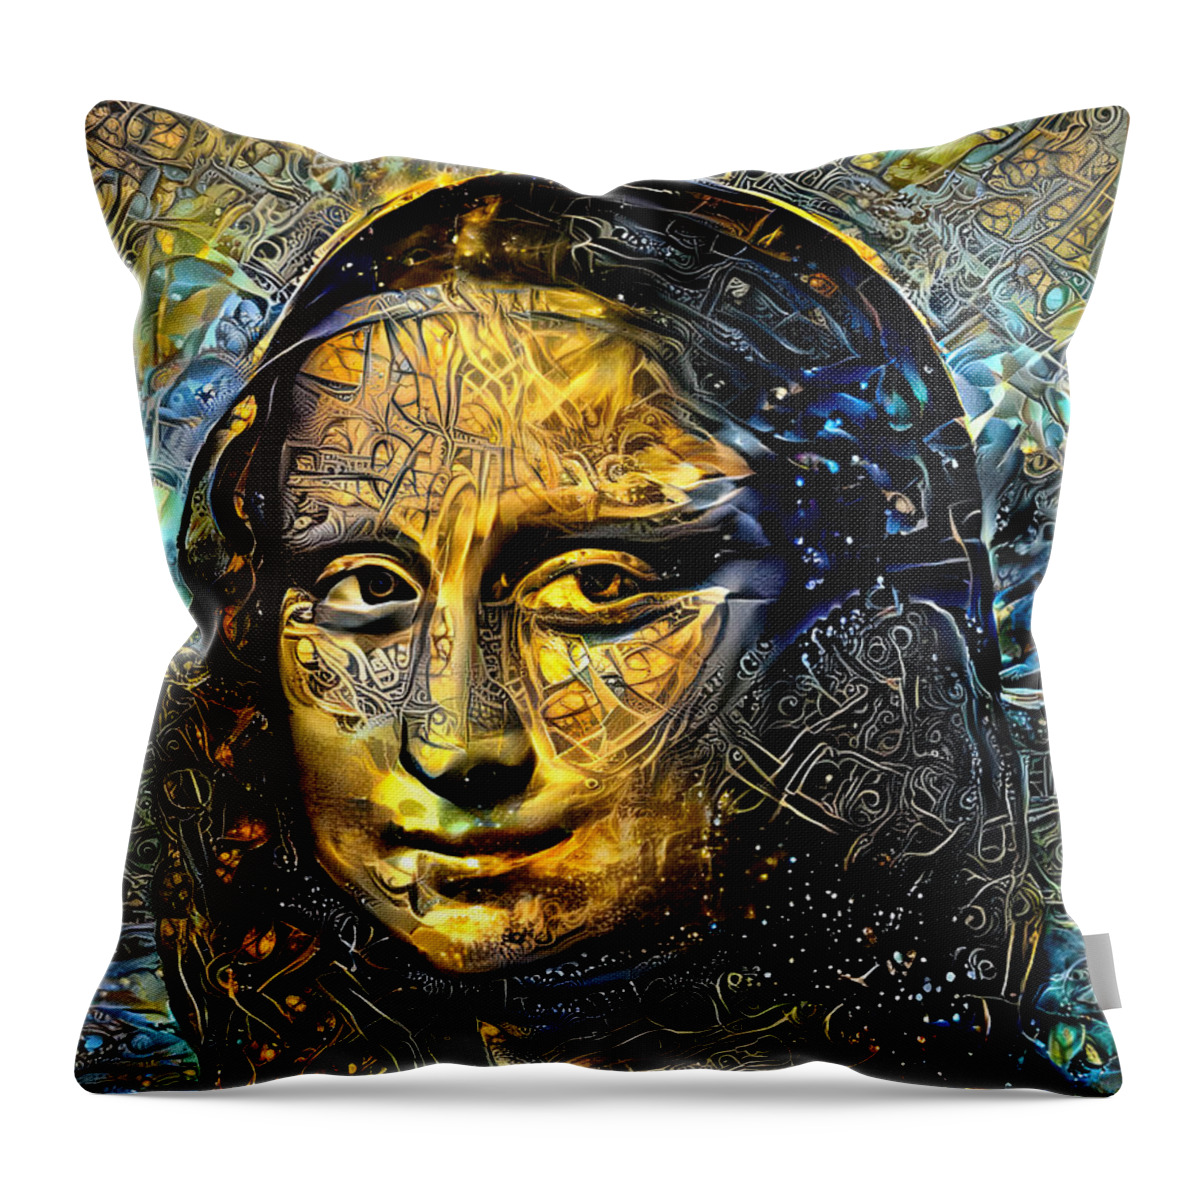 Mona Lisa Throw Pillow featuring the digital art Mona Lisa by Leonardo da Vinci - golden night design by Nicko Prints